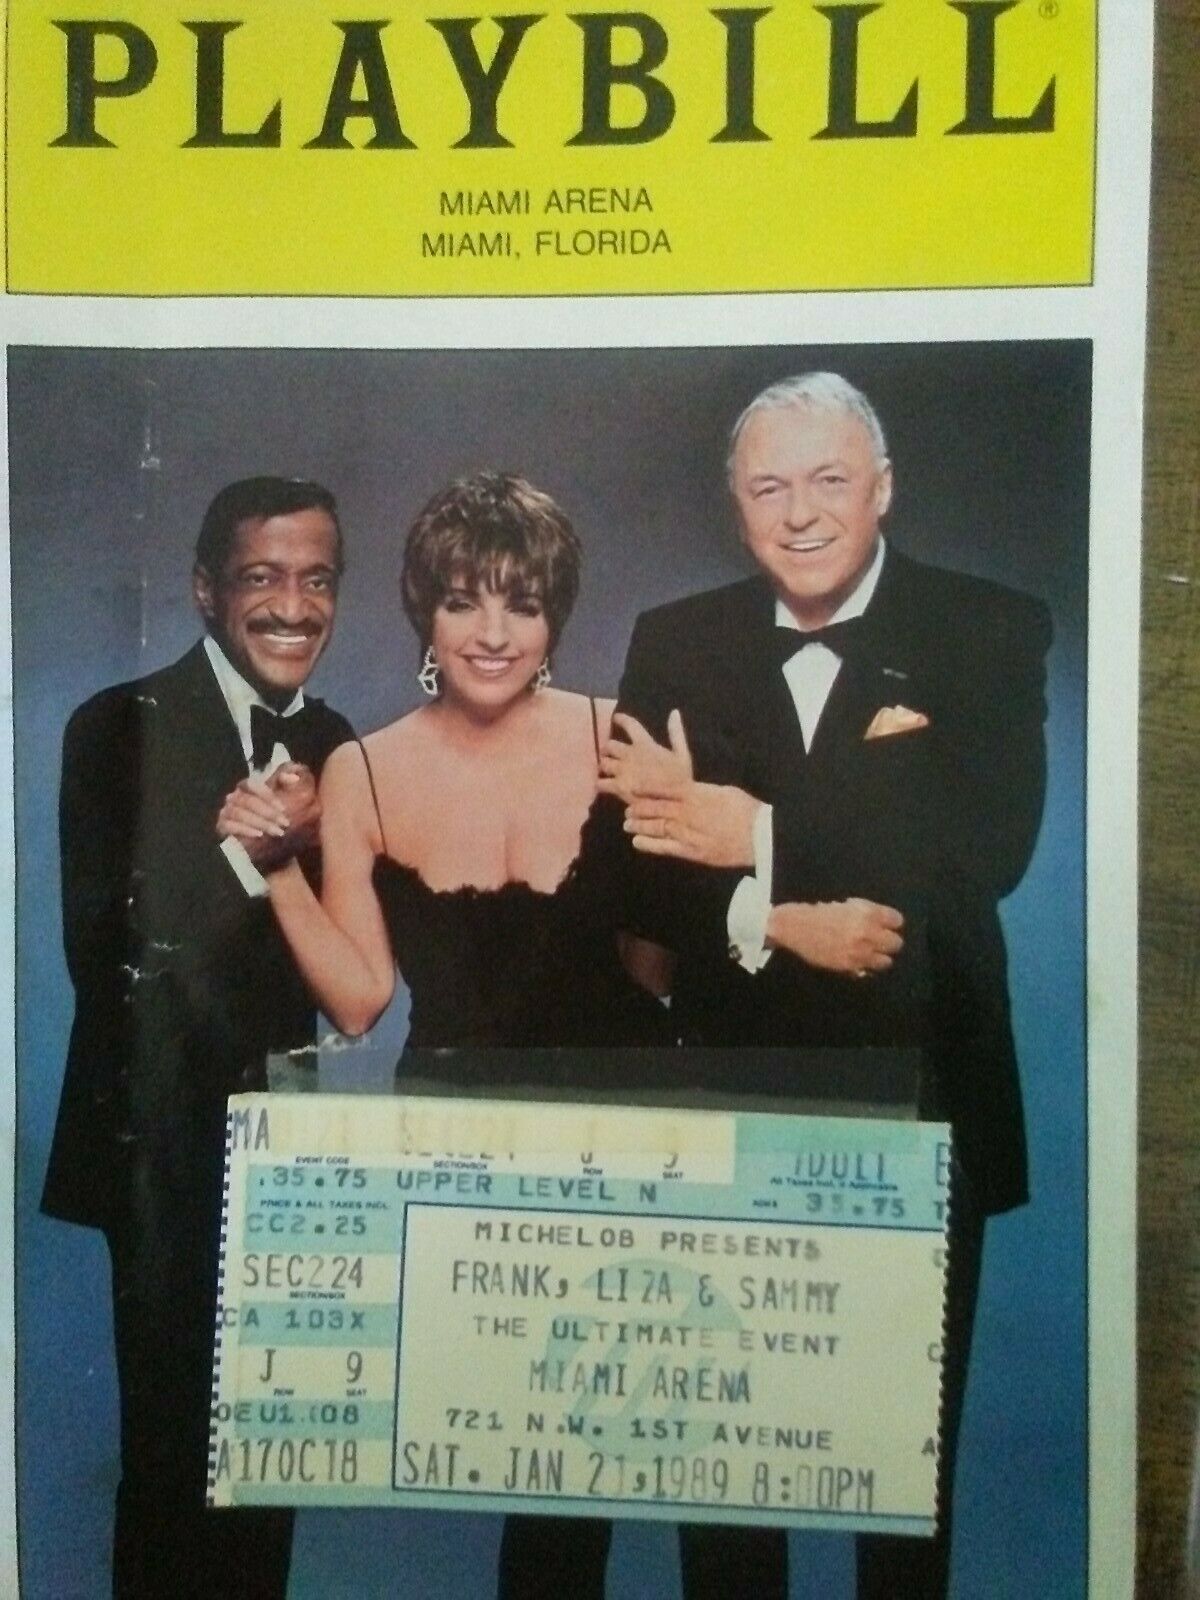 Playbill.1989 Frank,sammy, Liza.." Ultimate Event"